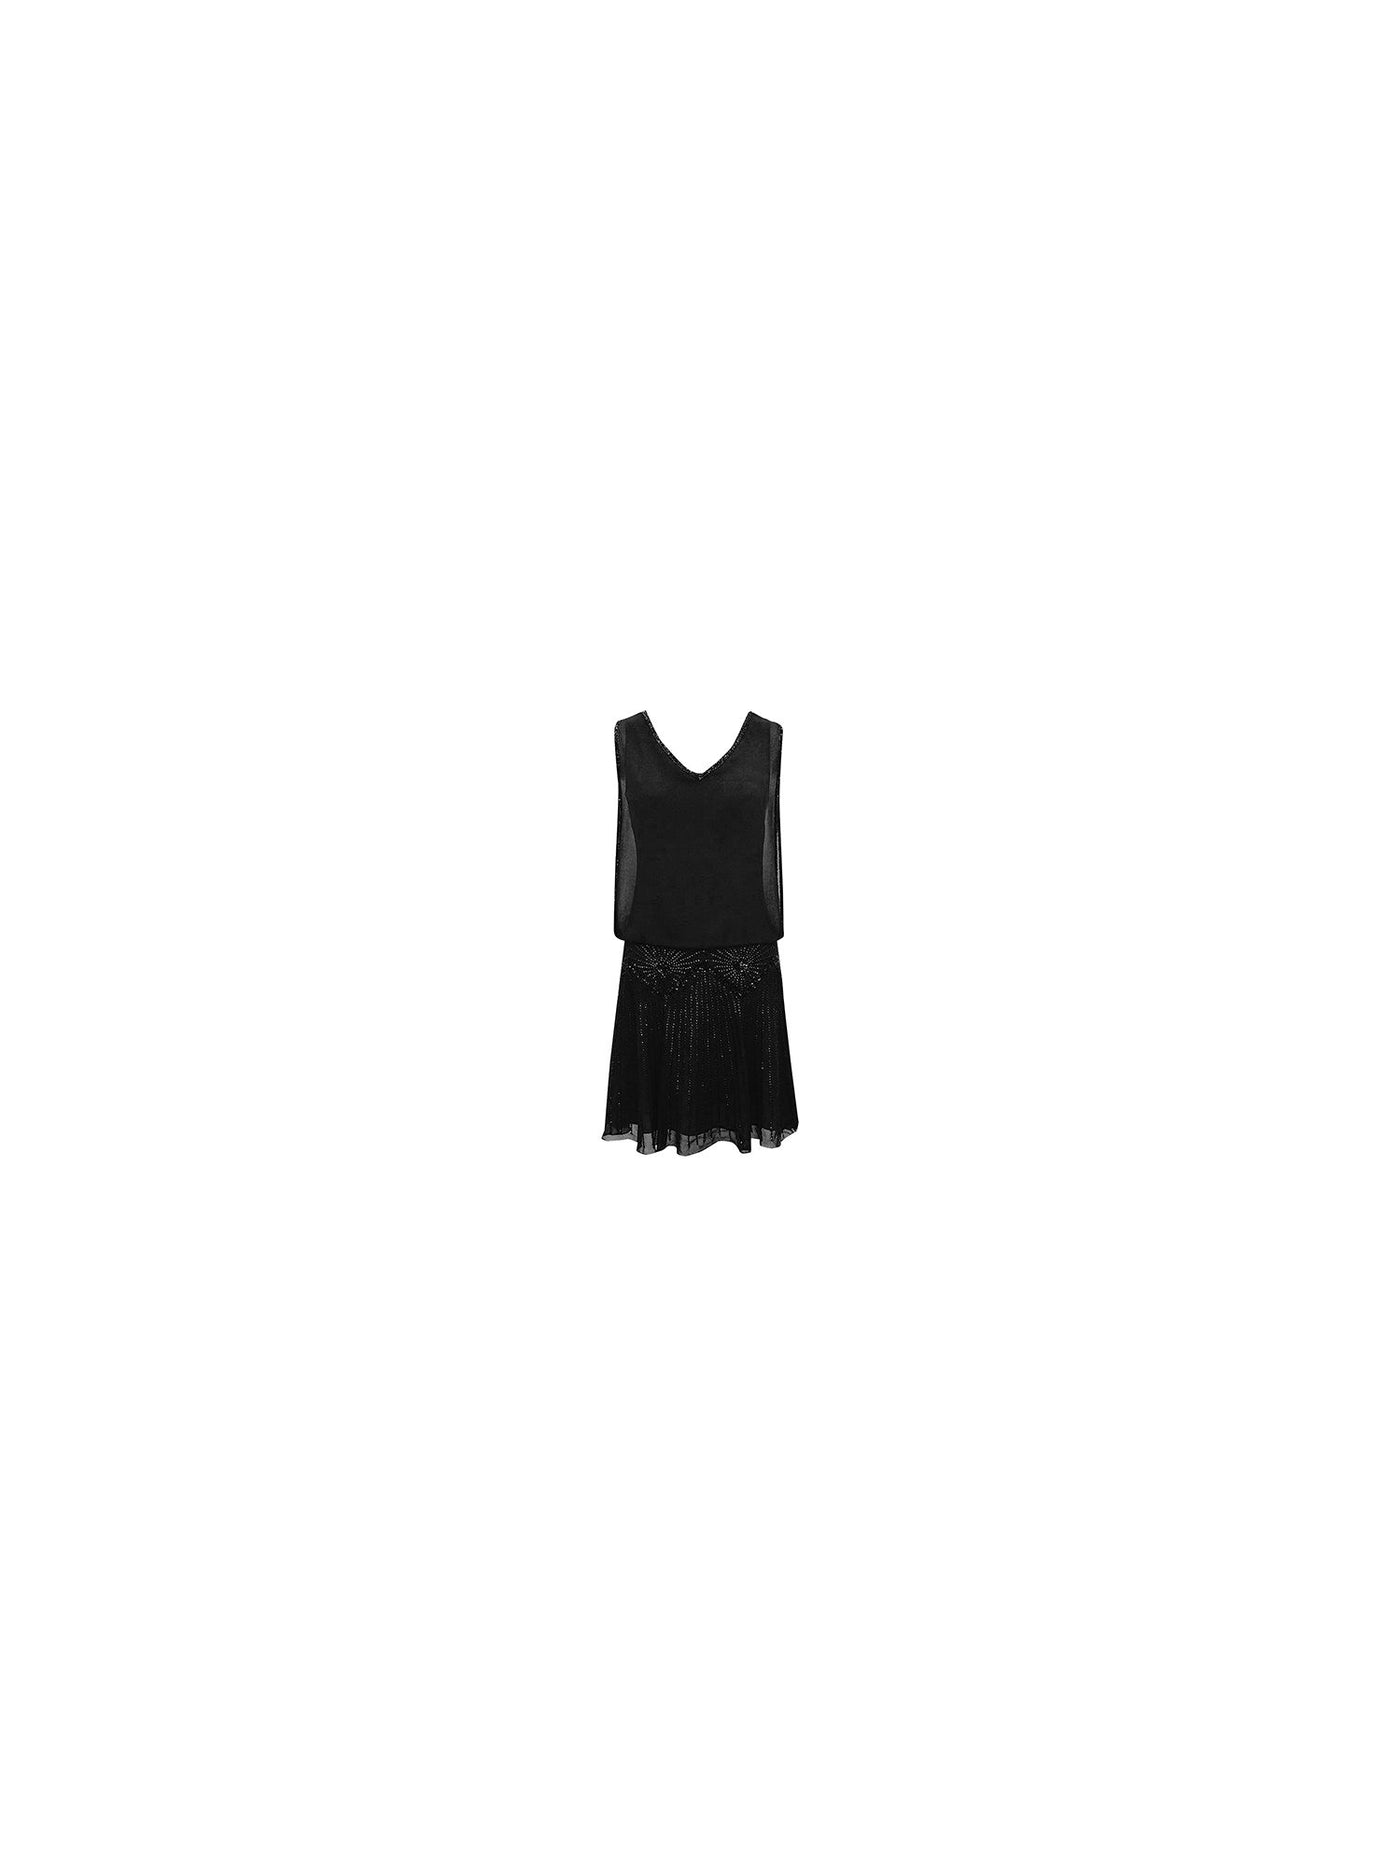 JKARA Womens Black Beaded Sequined Sleeveless V Neck Knee Length Cocktail Fit + Flare Dress 12